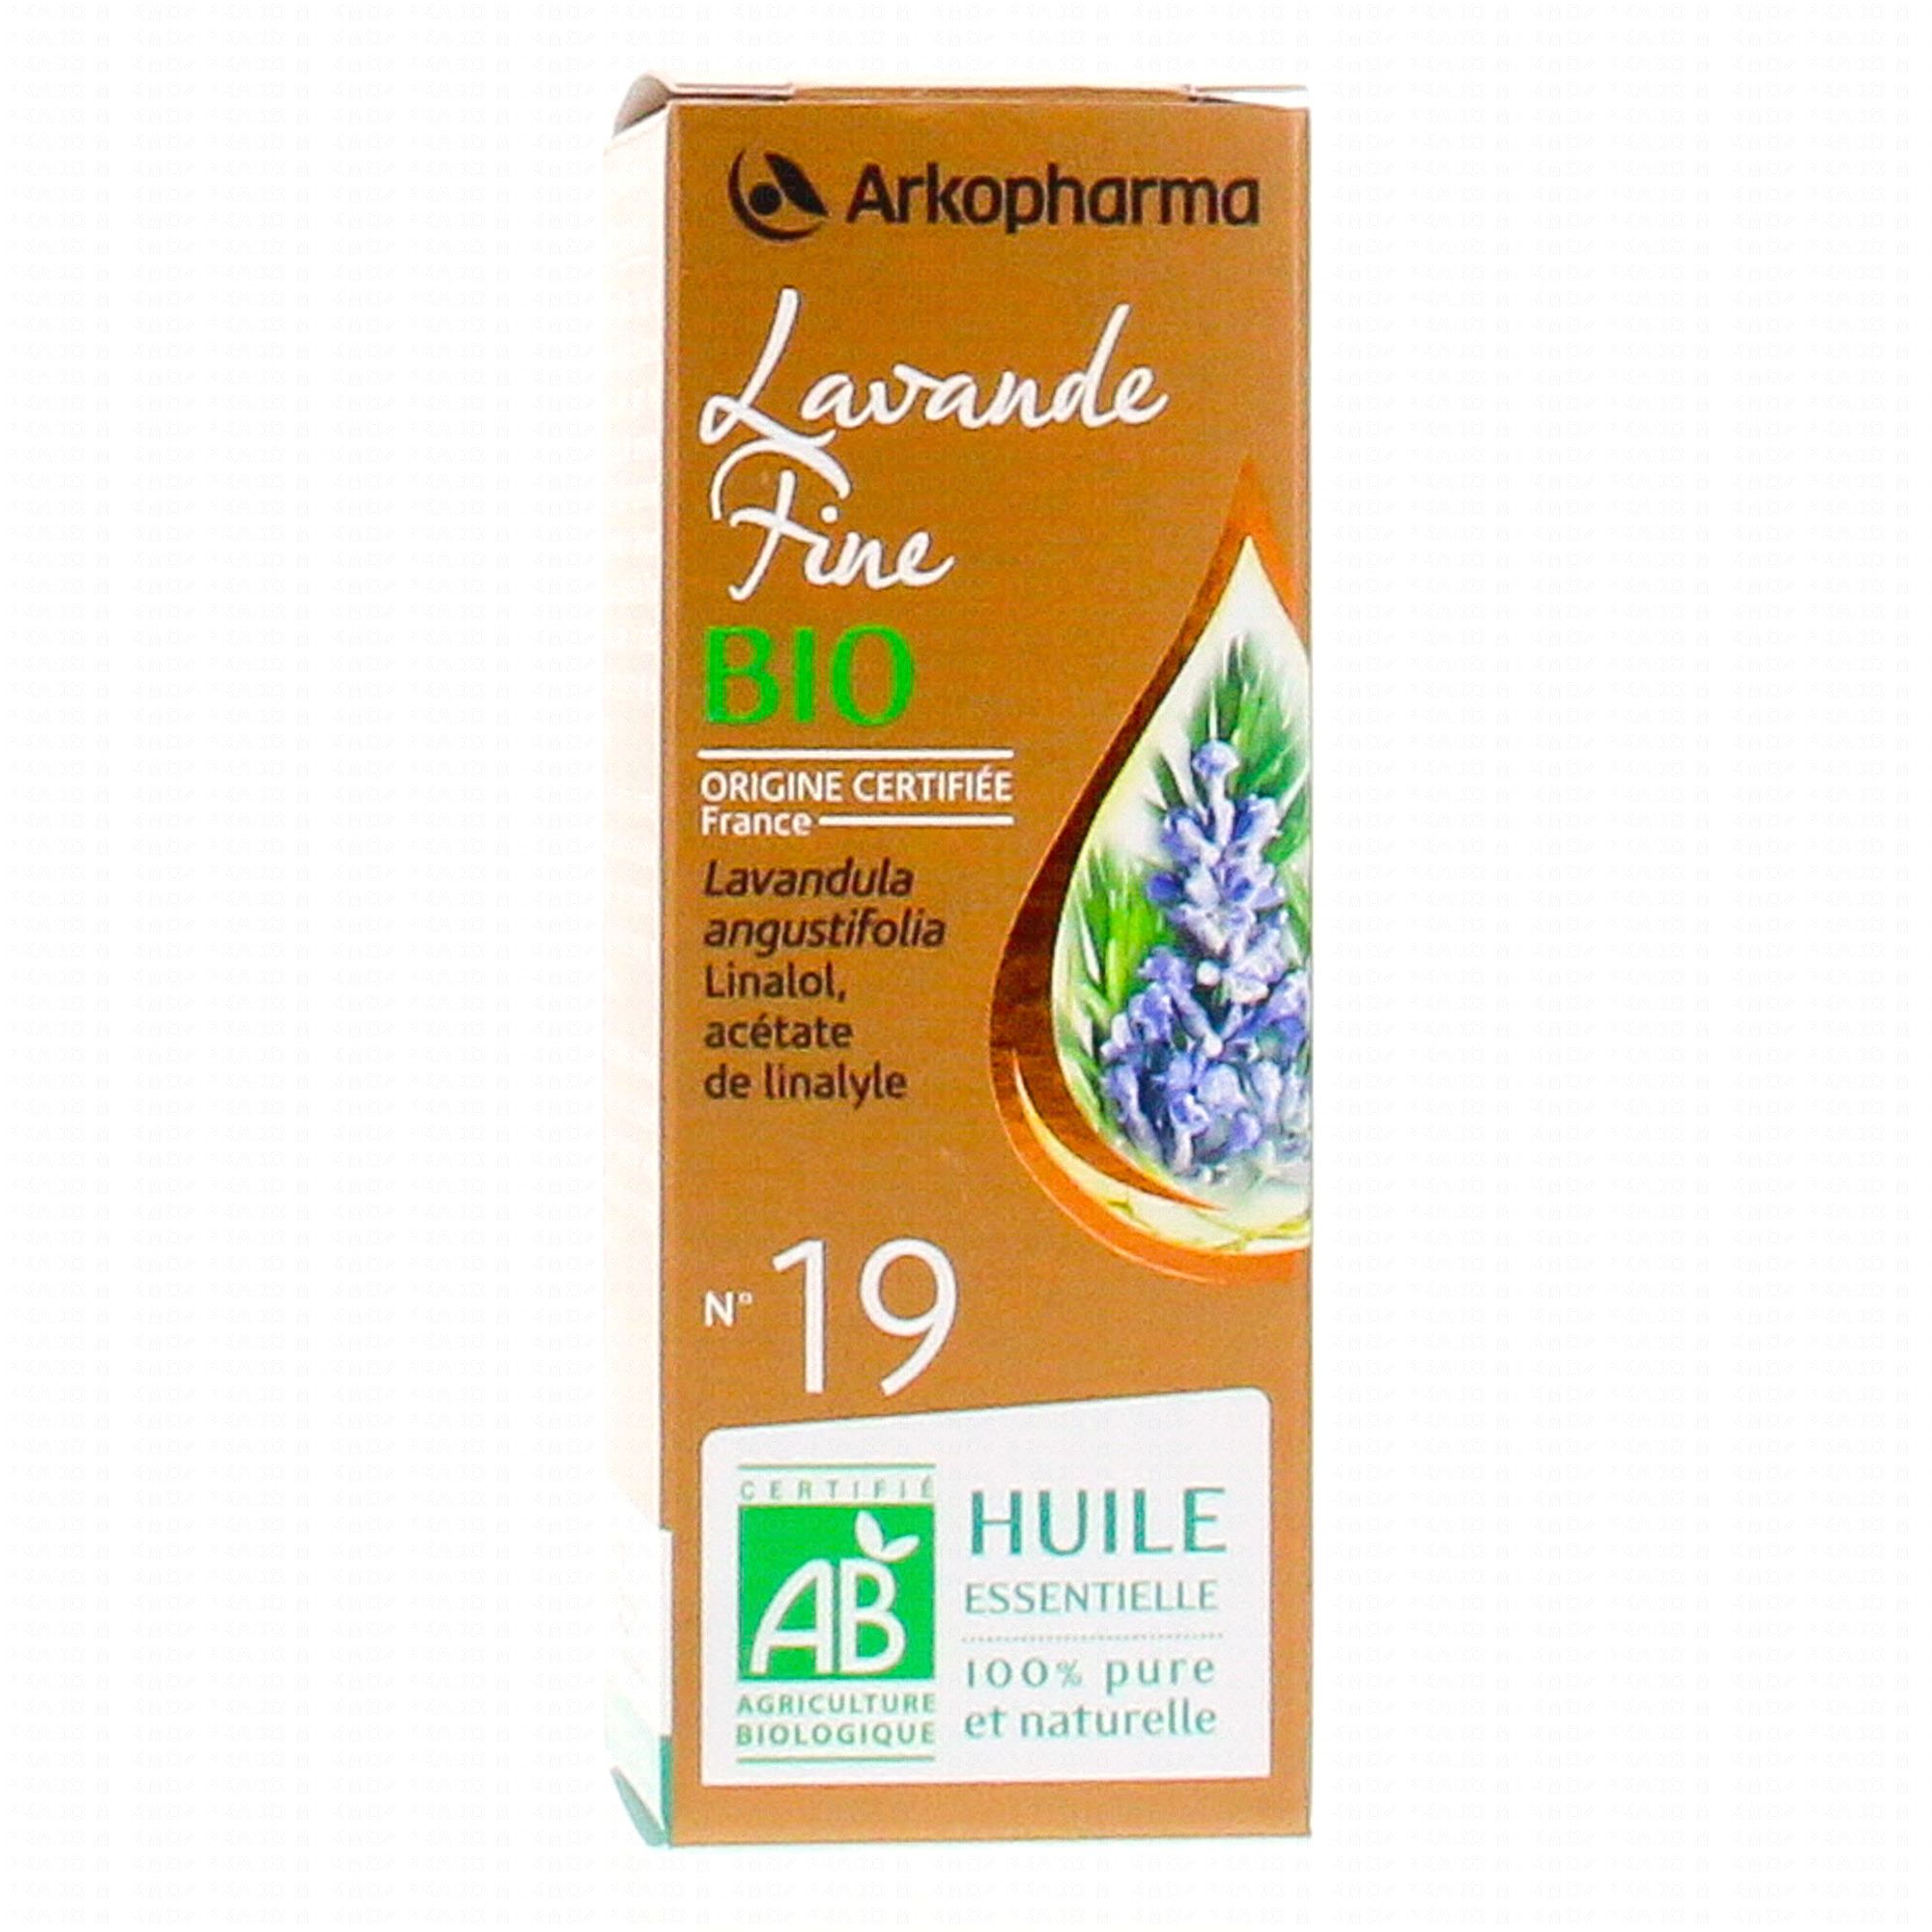 ARKOPHARMA Arkoessentiel - Huile essentielle Lavande fine N°19 Bio flacon  10ml - Parapharmacie Prado Mermoz